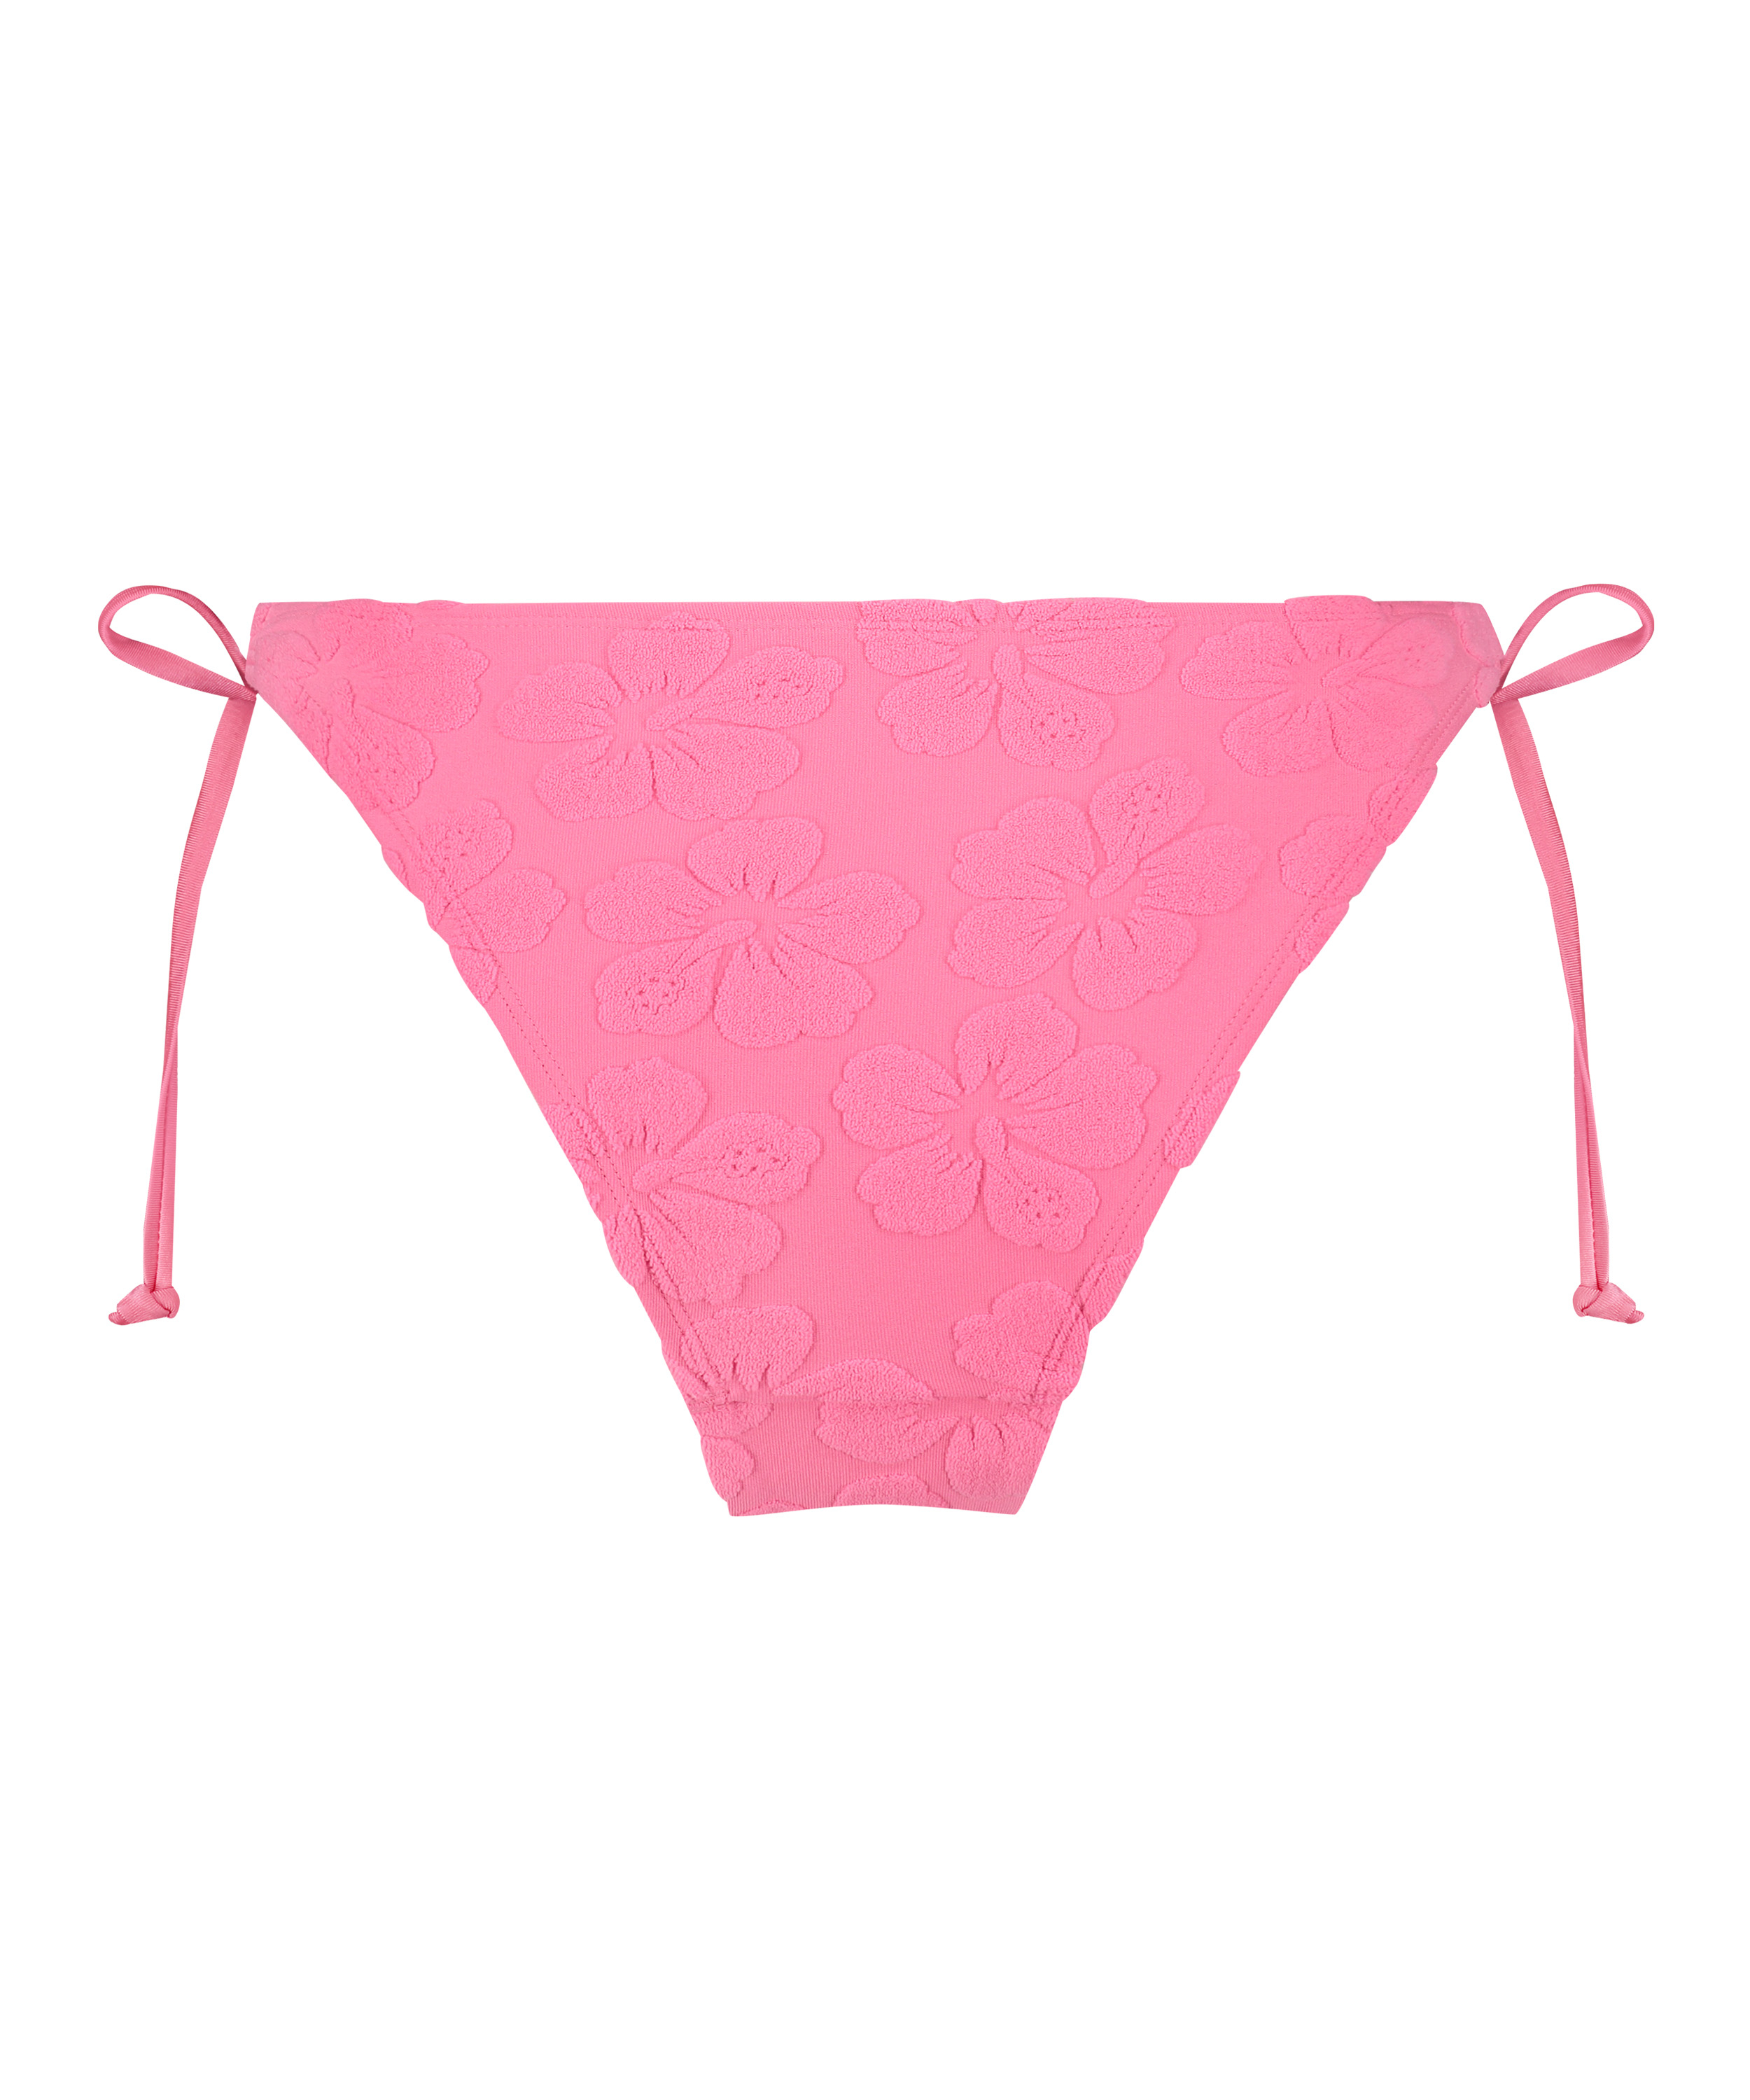 Hula Cheeky Tanga Bikini Bottoms, Pink, main